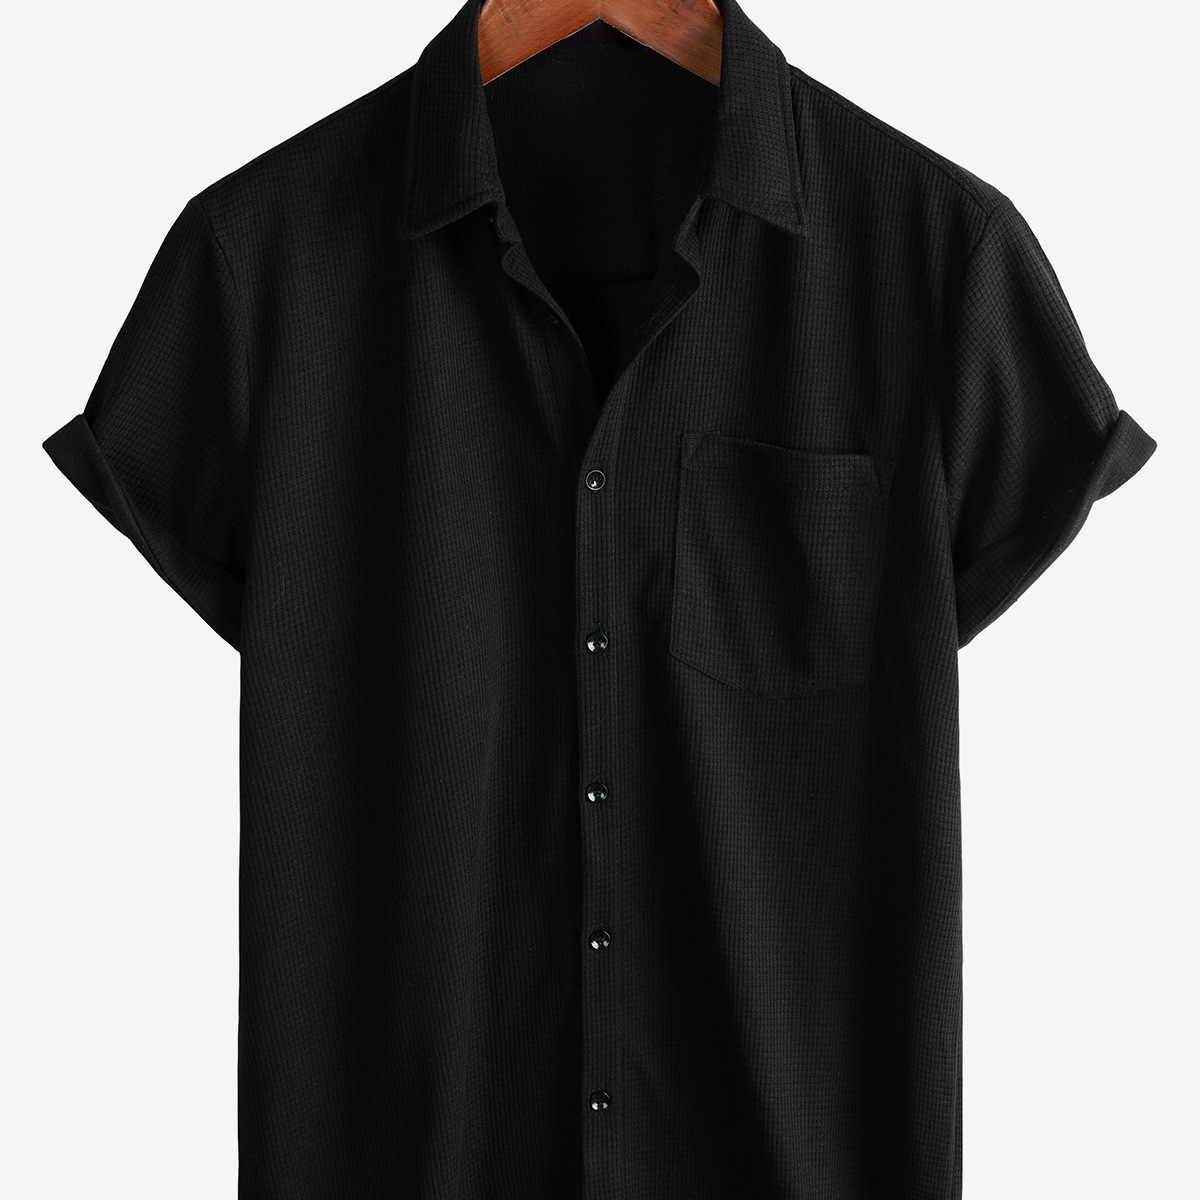 Men's Casual Waffle Short Sleeve Button Up Summer Loose Fit Beach Shirt